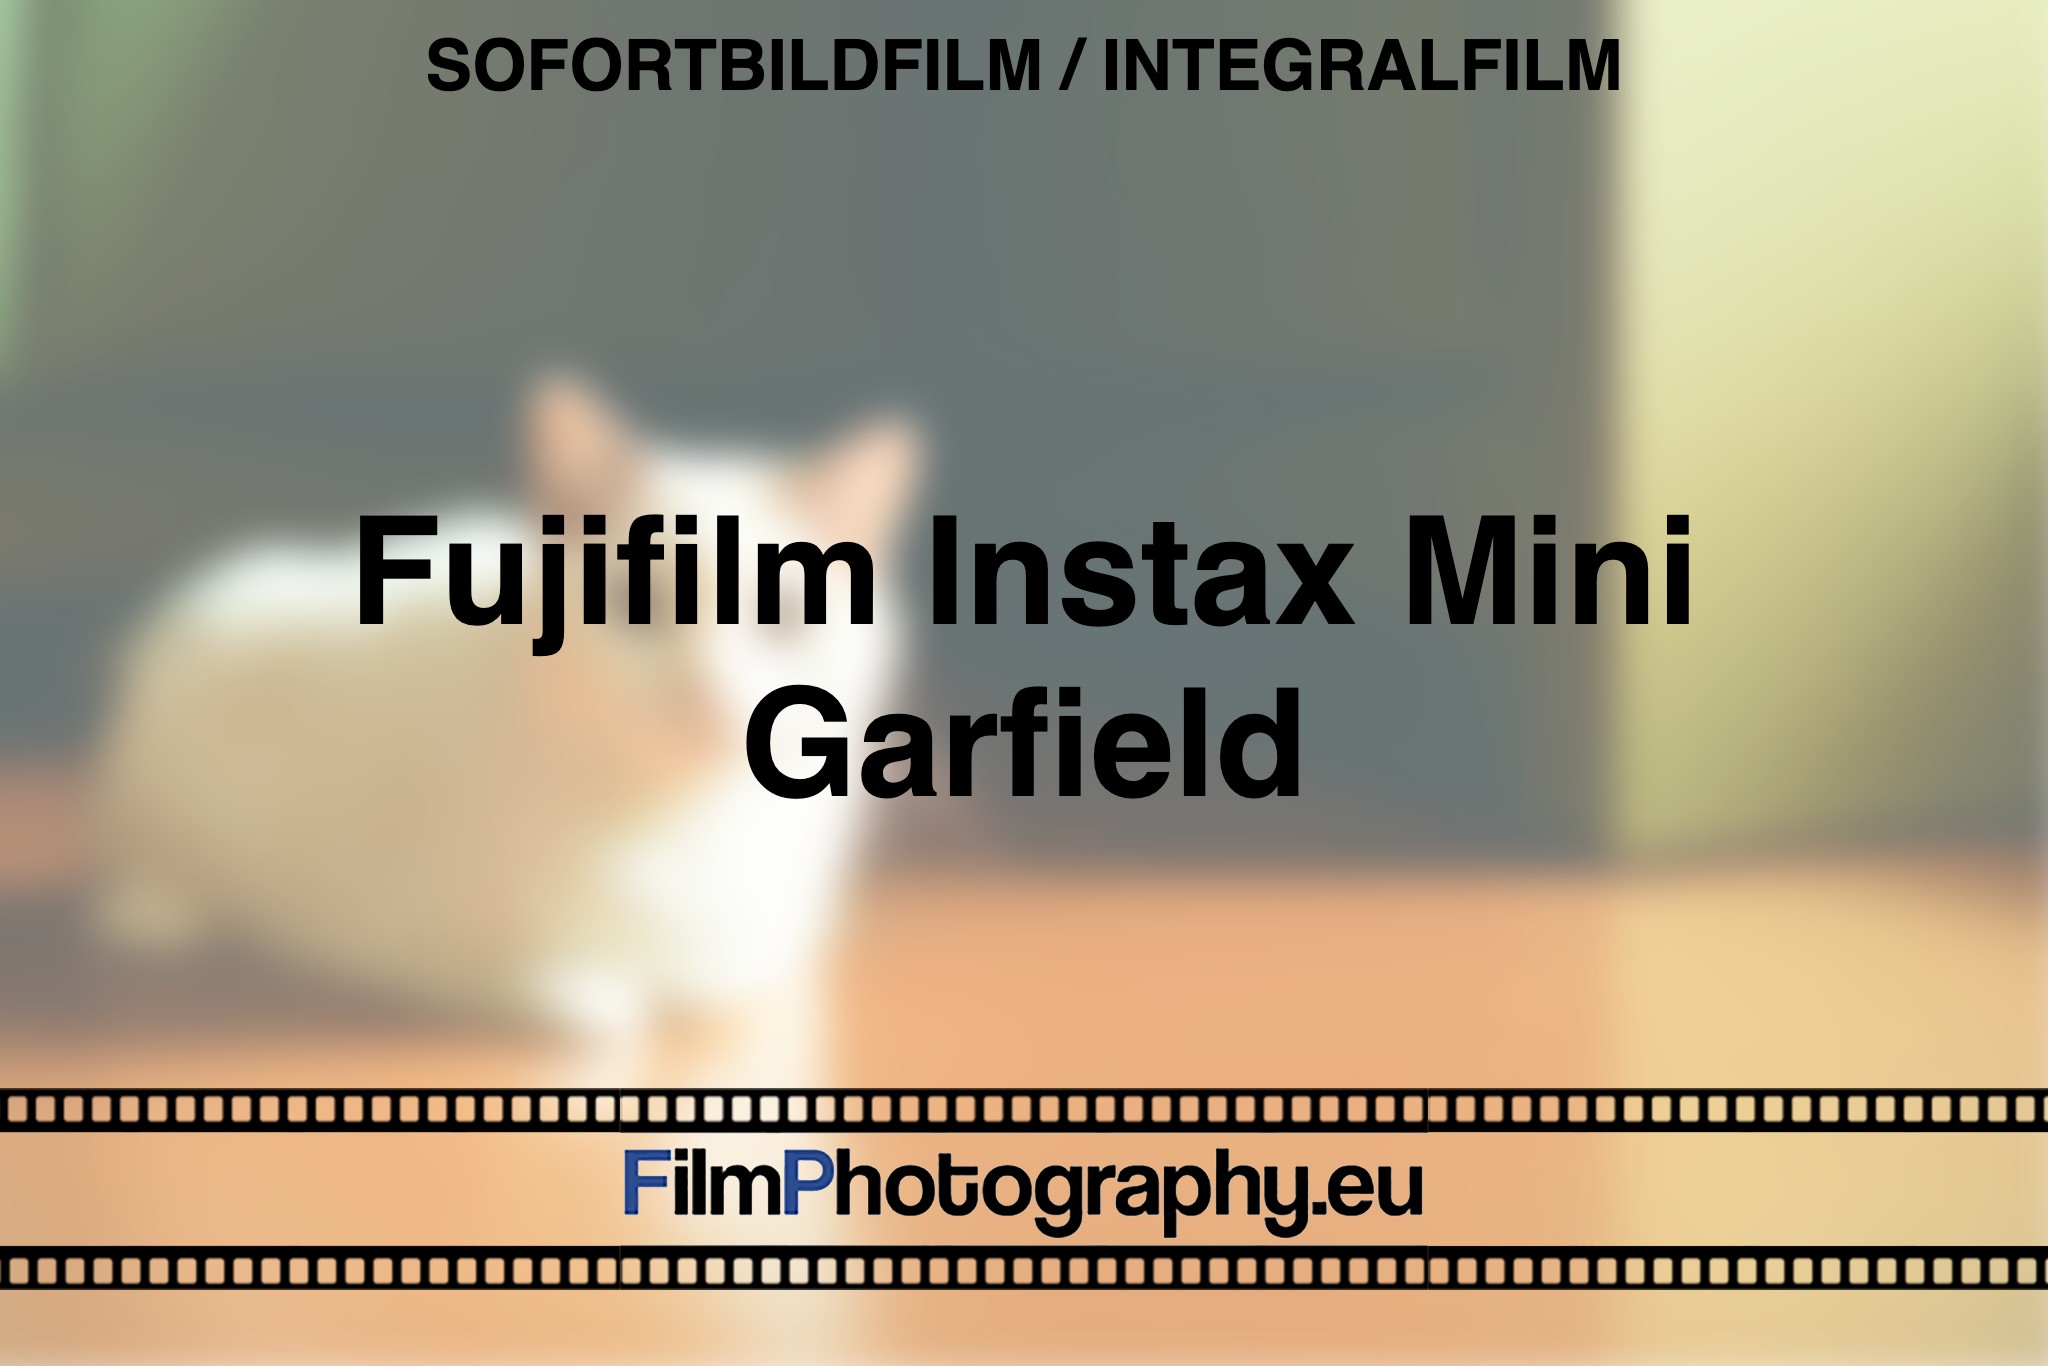 fujifilm-instax-mini-garfield-sofortbildfilm-integralfilm-fp-bnv